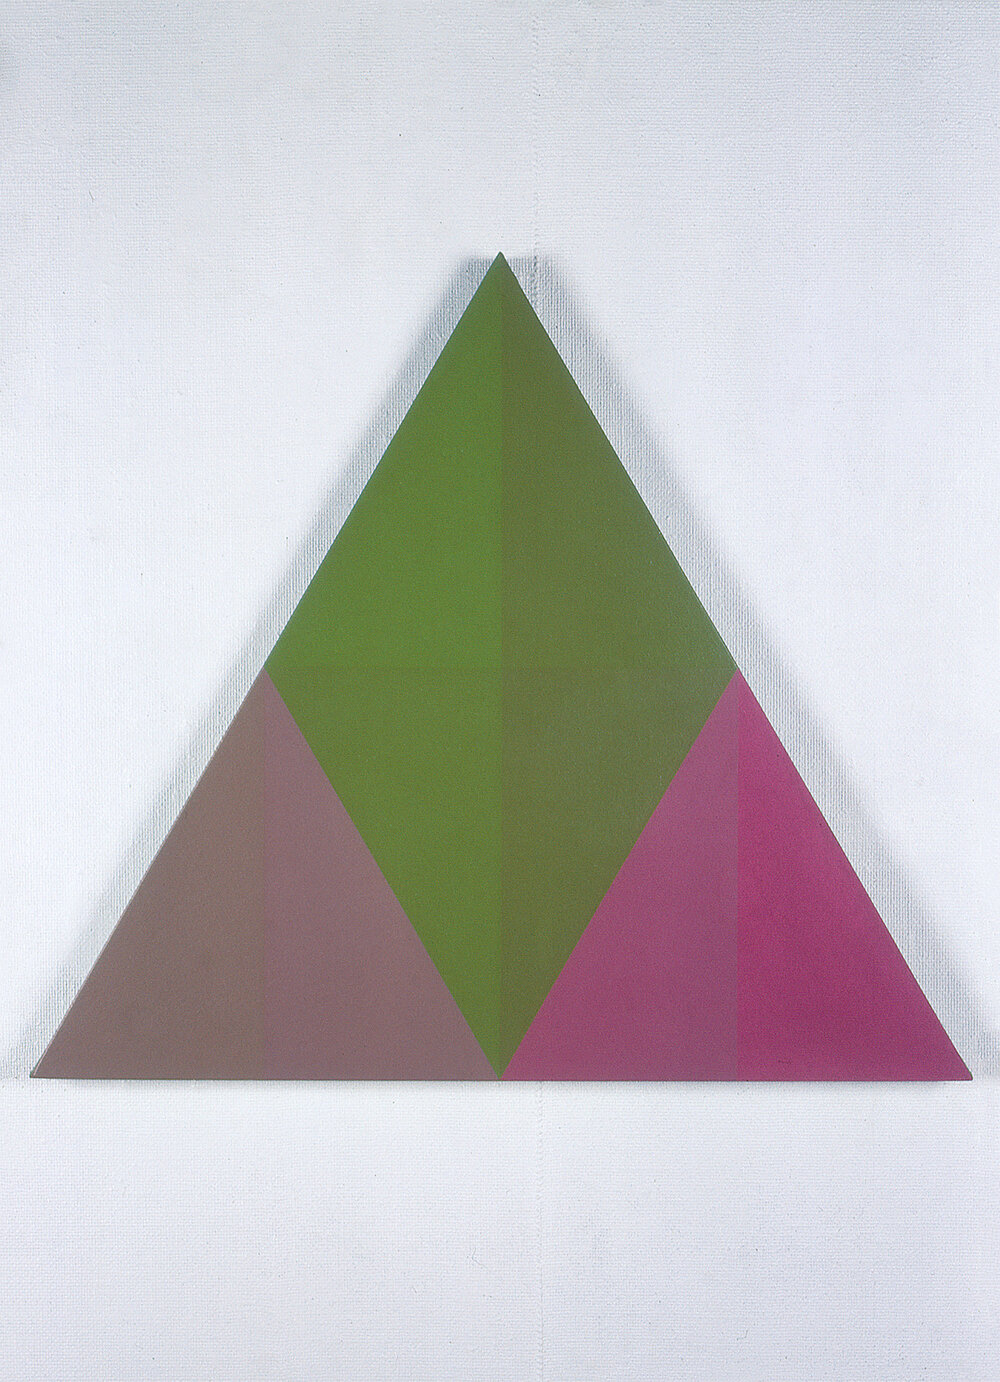 Painters Triangle (pyramid) by MrNateTheGreat